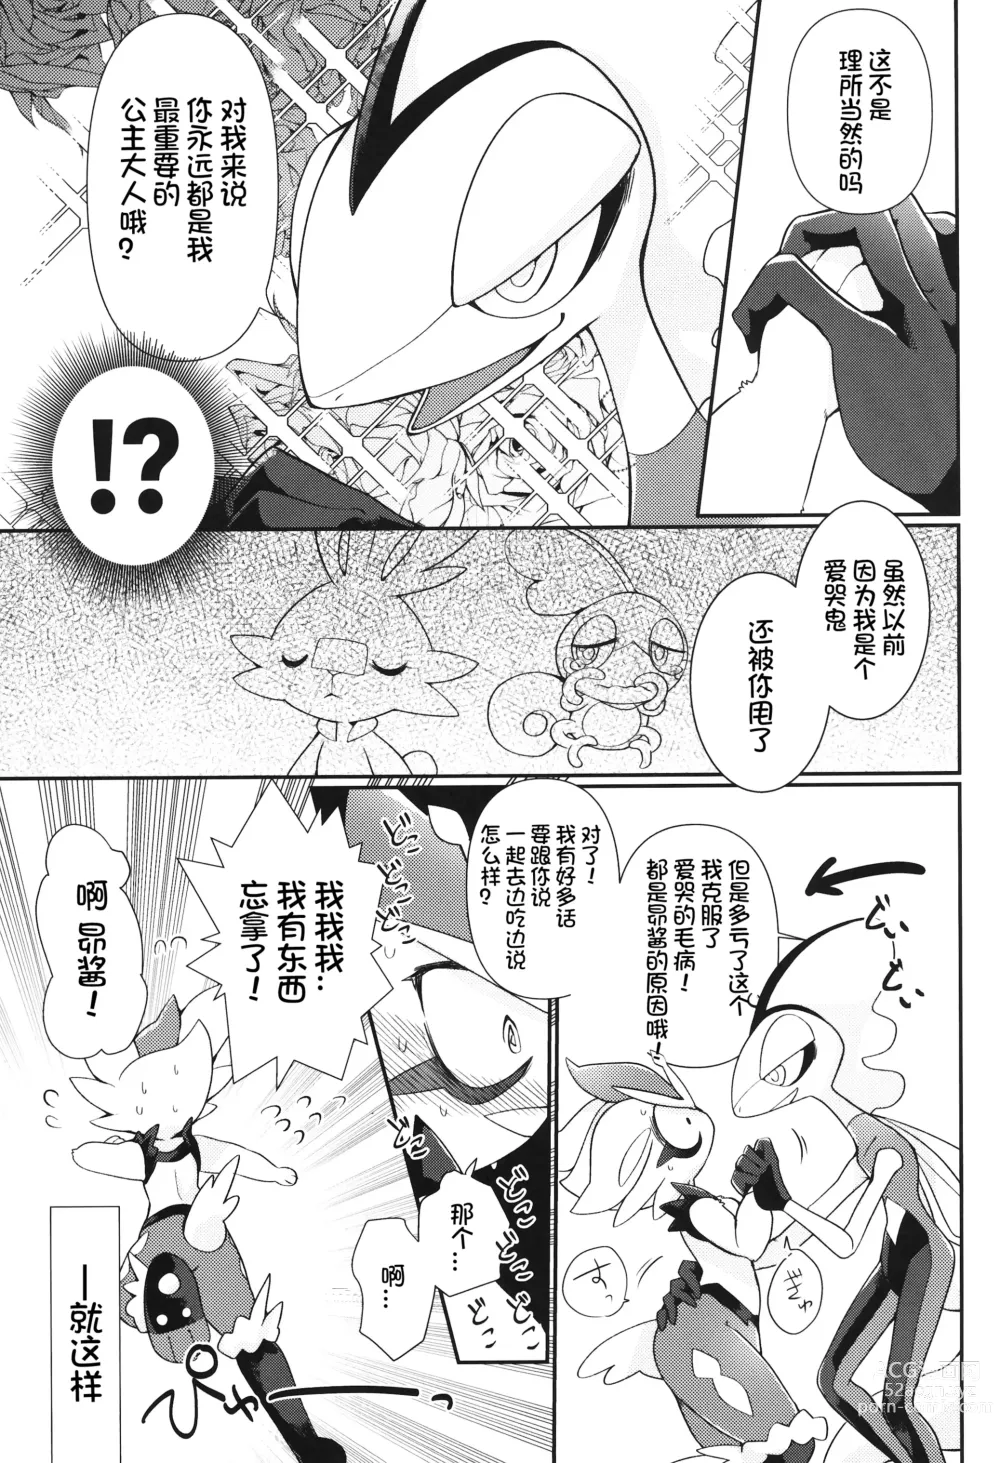 Page 7 of doujinshi 蜂蜜苹果咖喱